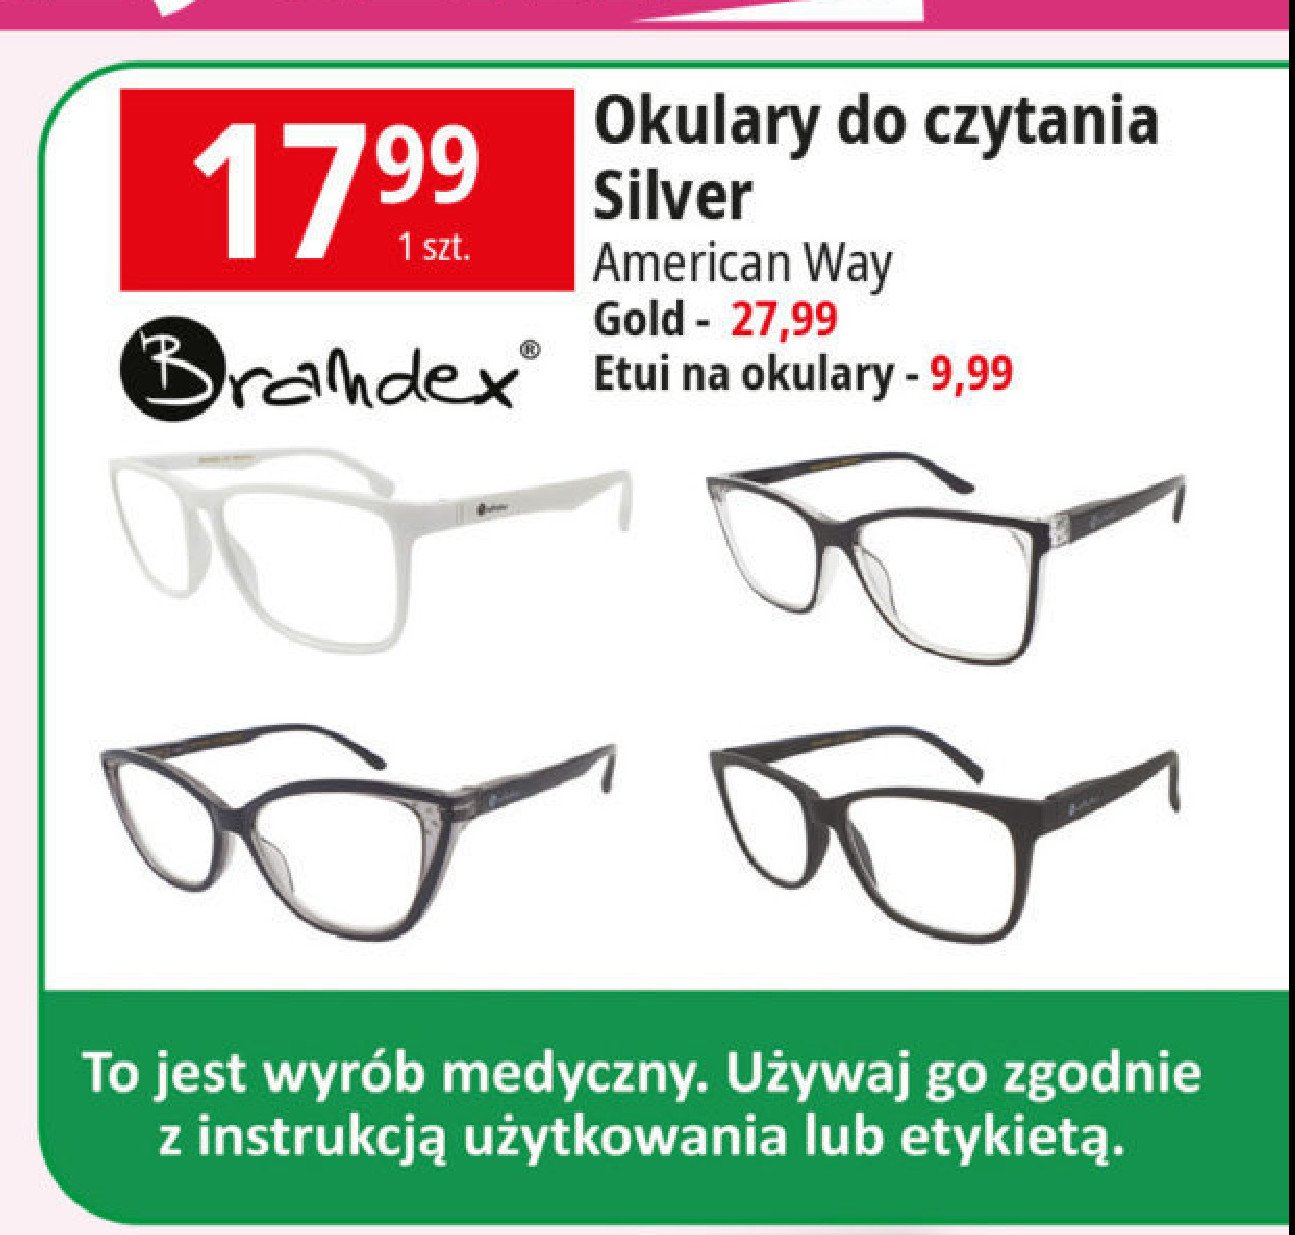 Etui na okulary Brandex promocja